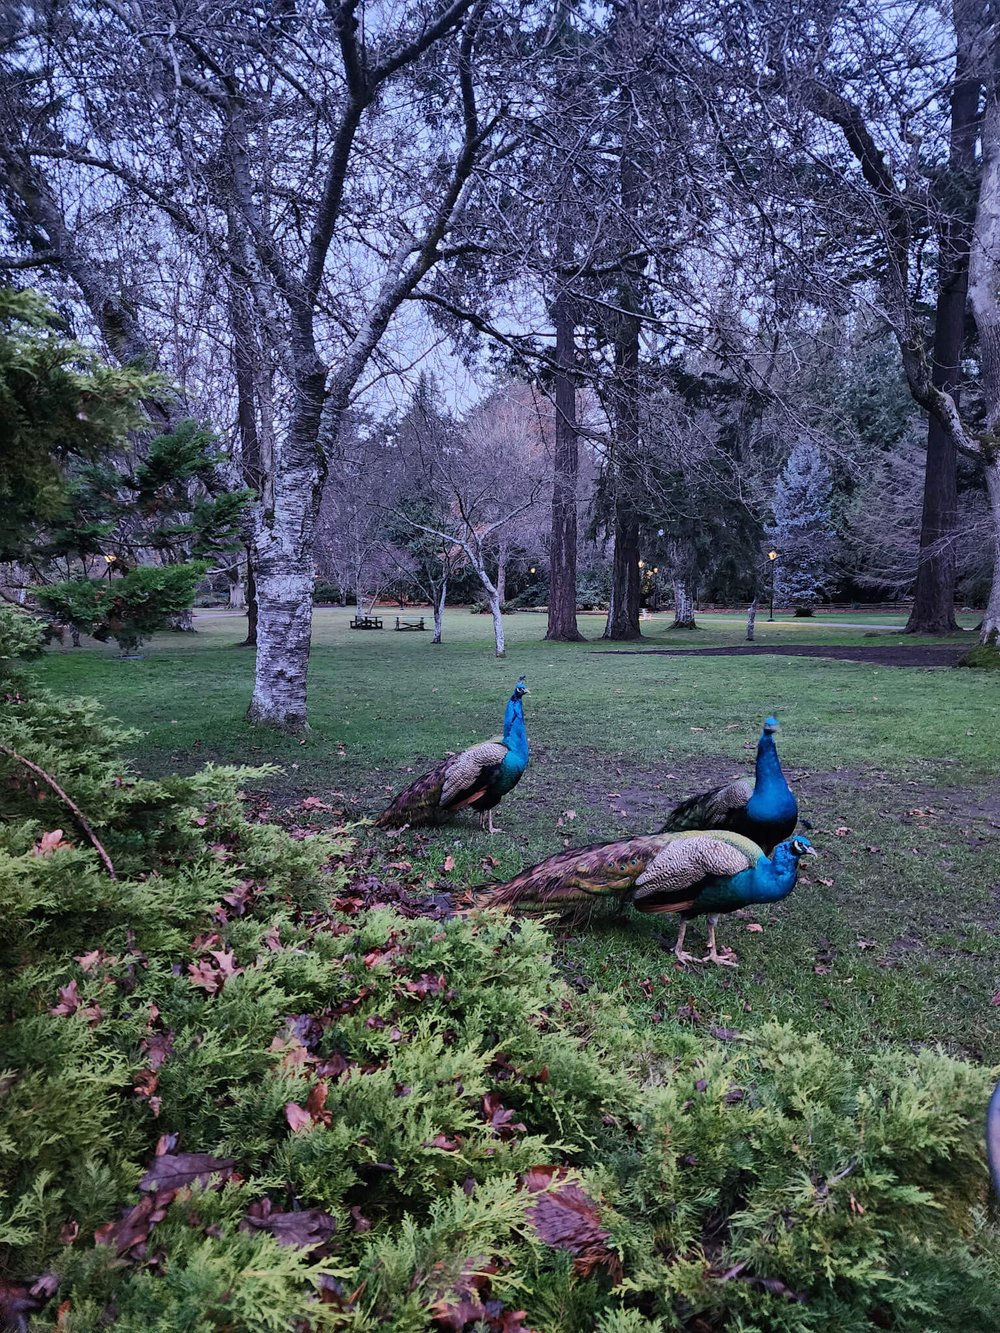 Peacocks at Beacon Hill Park